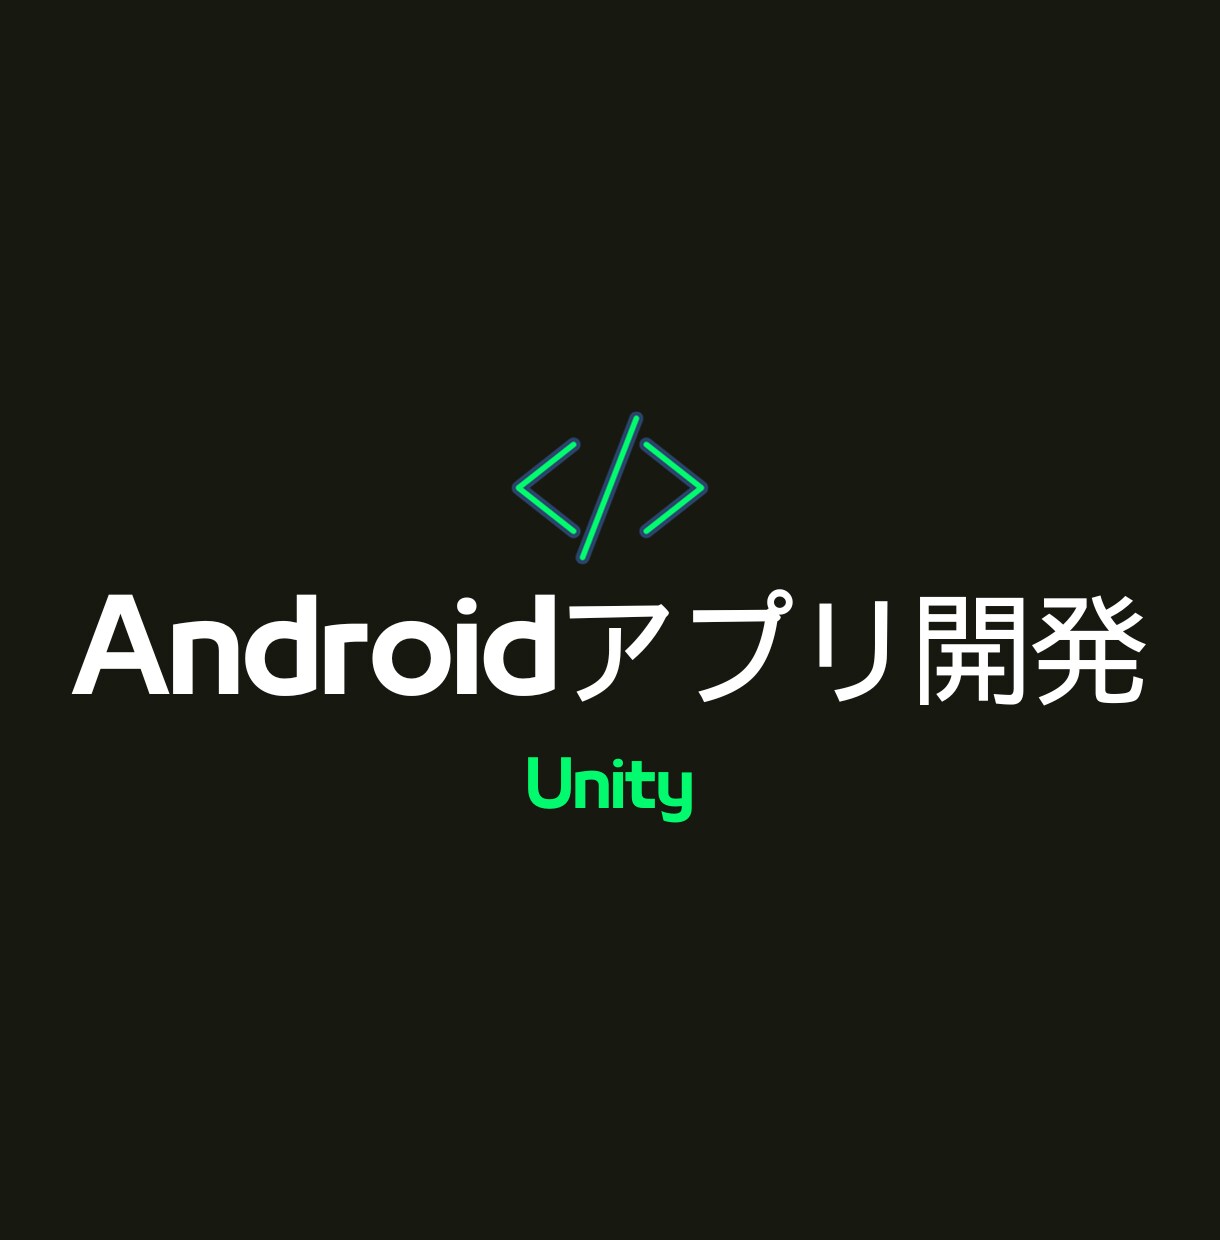 💬Coconara｜Developing Android apps
               DAN__
                –
             …